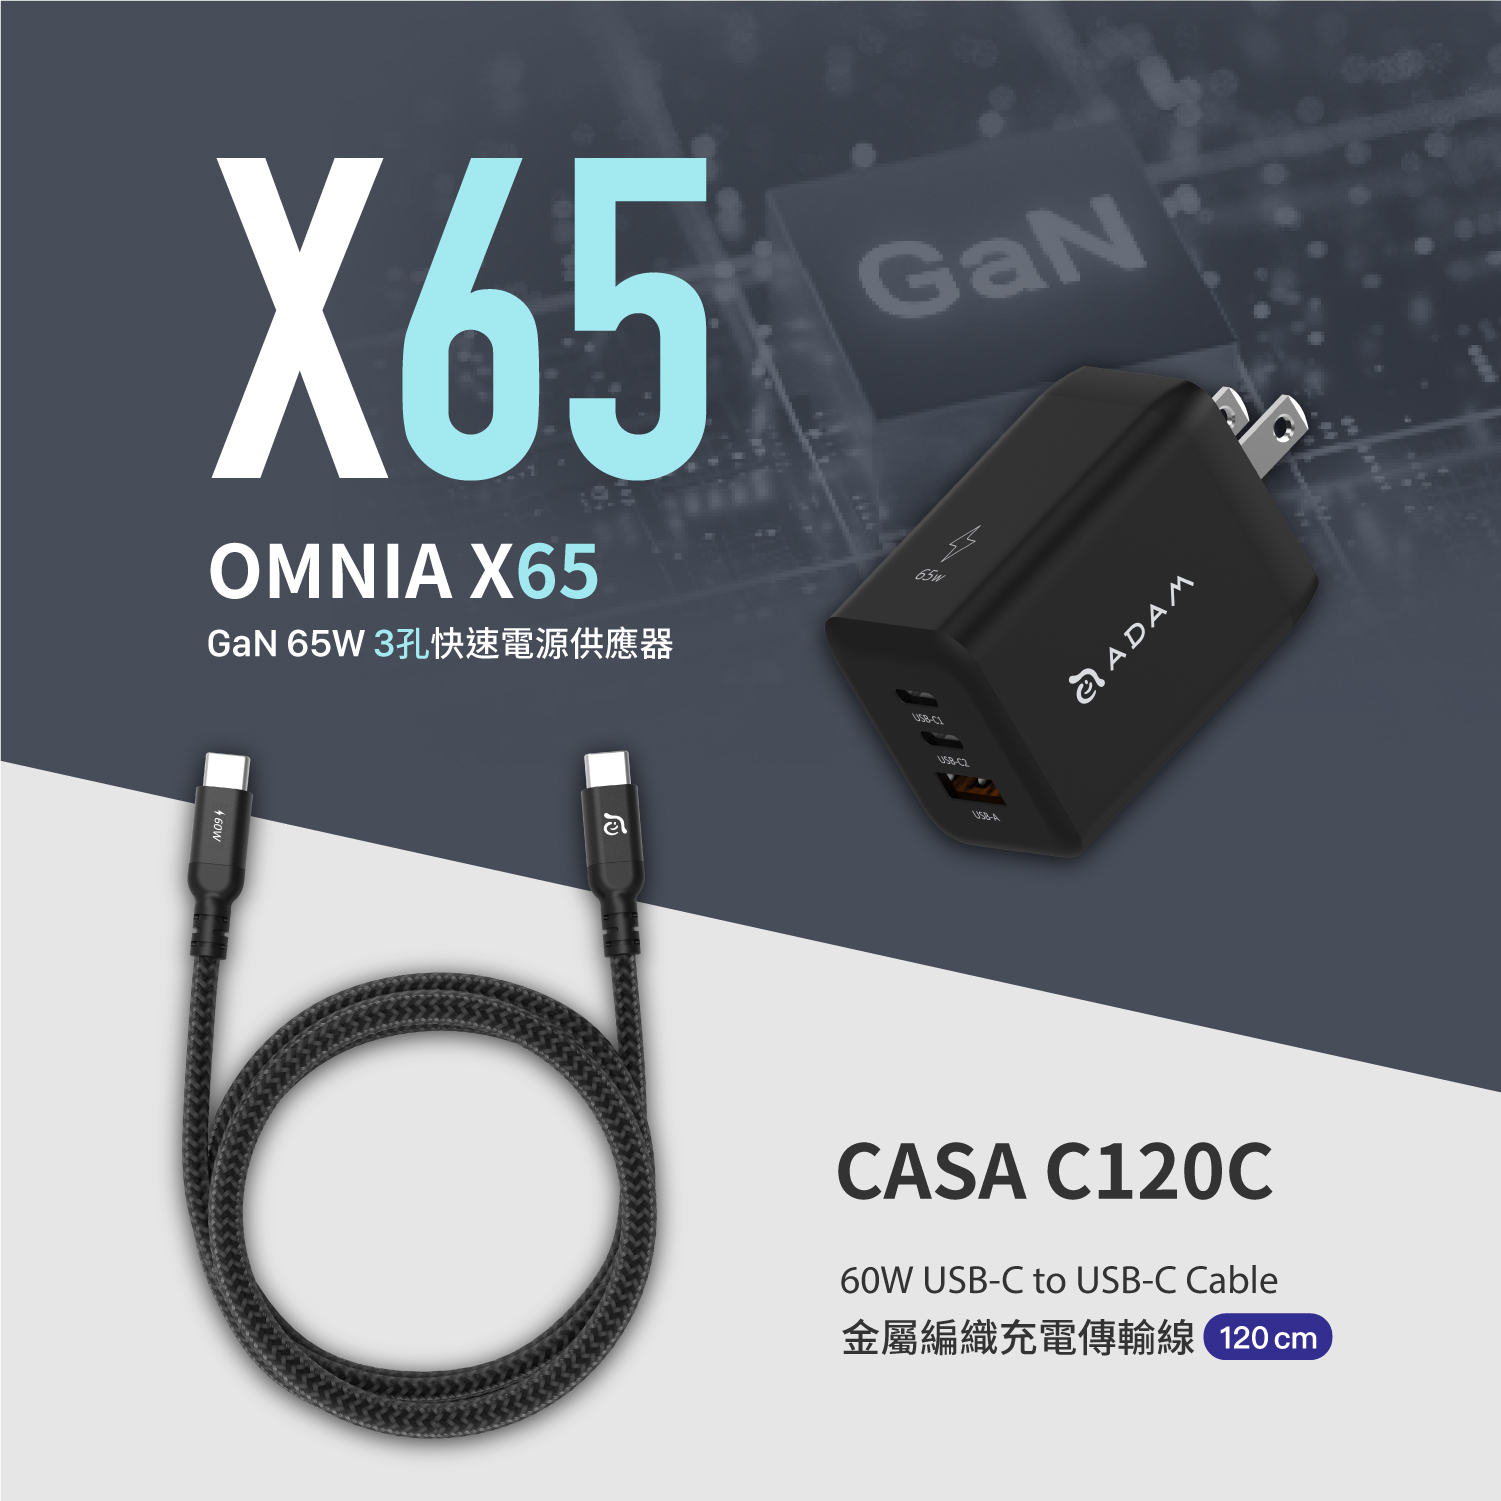 OMNIA X65 GaN 65W 3孔快速電源供應器_CASA C120C 60W 充電傳輸線